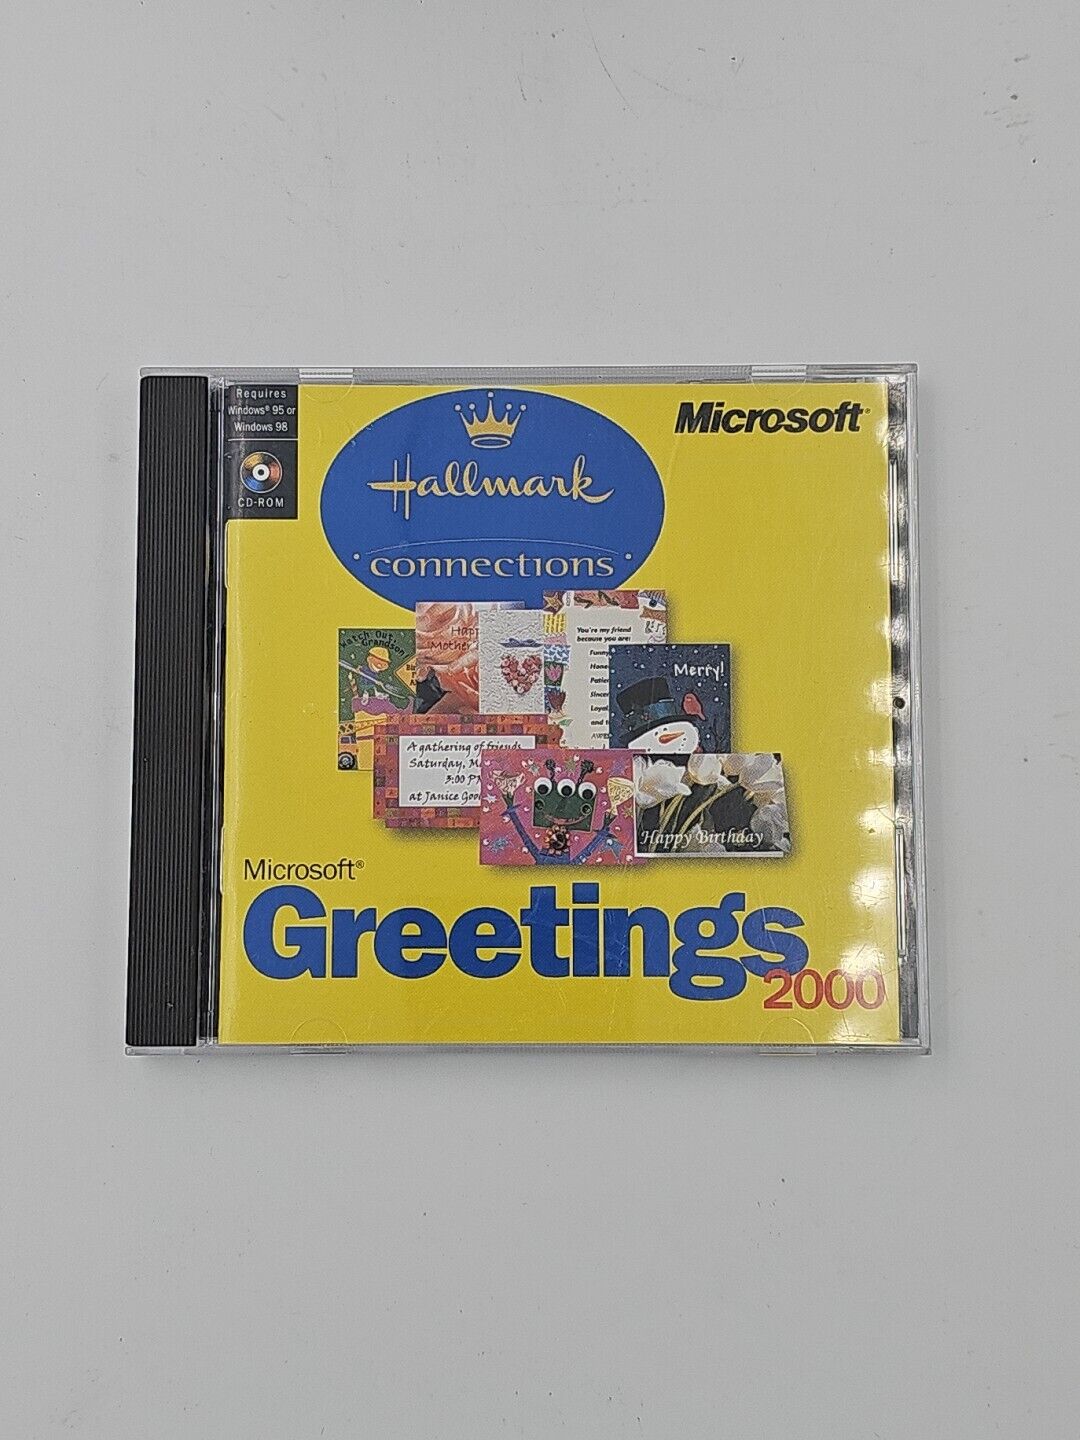 Microsoft Greetings 2000 Hallmark Connections CD ROM 